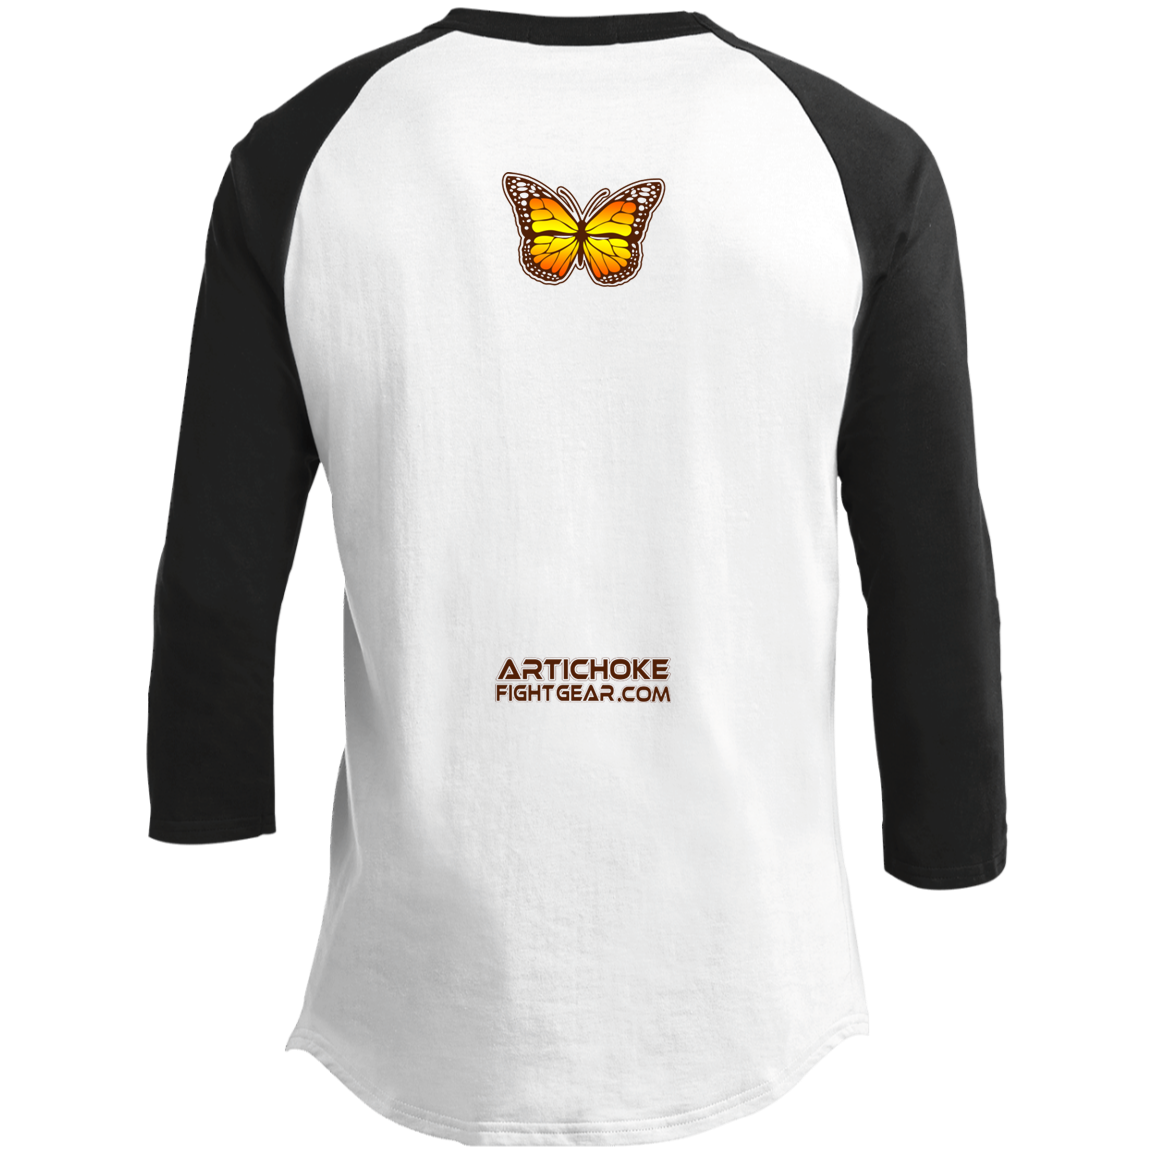 Artichoke Fight Gear Custom Design #6. Lepidopterology (Study of butterflies). Butterfly Guard. Youth 3/4 Raglan Sleeve Shirt